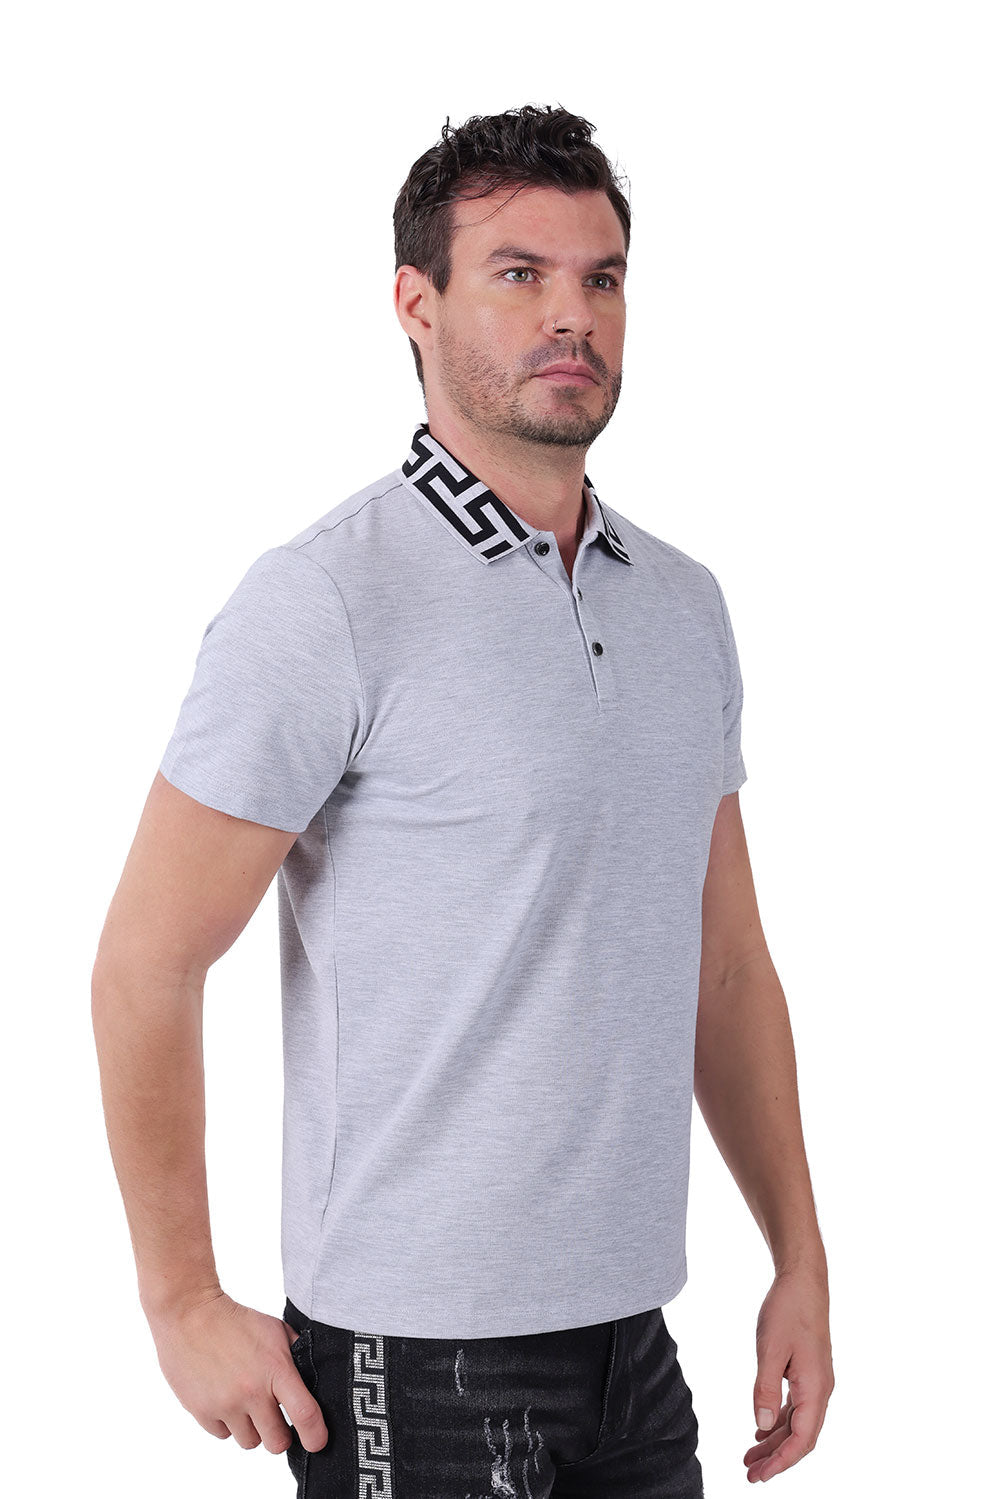 Barabas Men's Greek Key Printed Pattern Short Sleeve Shirts PS121 Silver